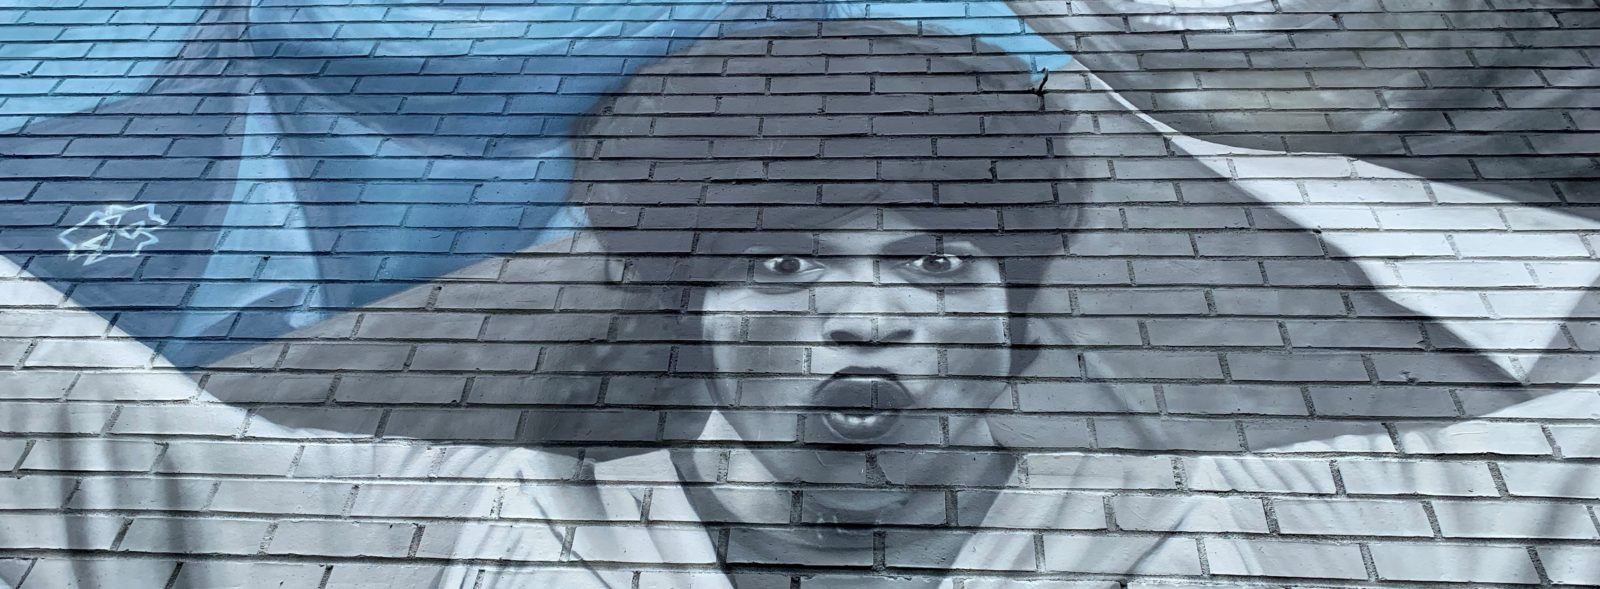 Little Richard Mural in Macon.